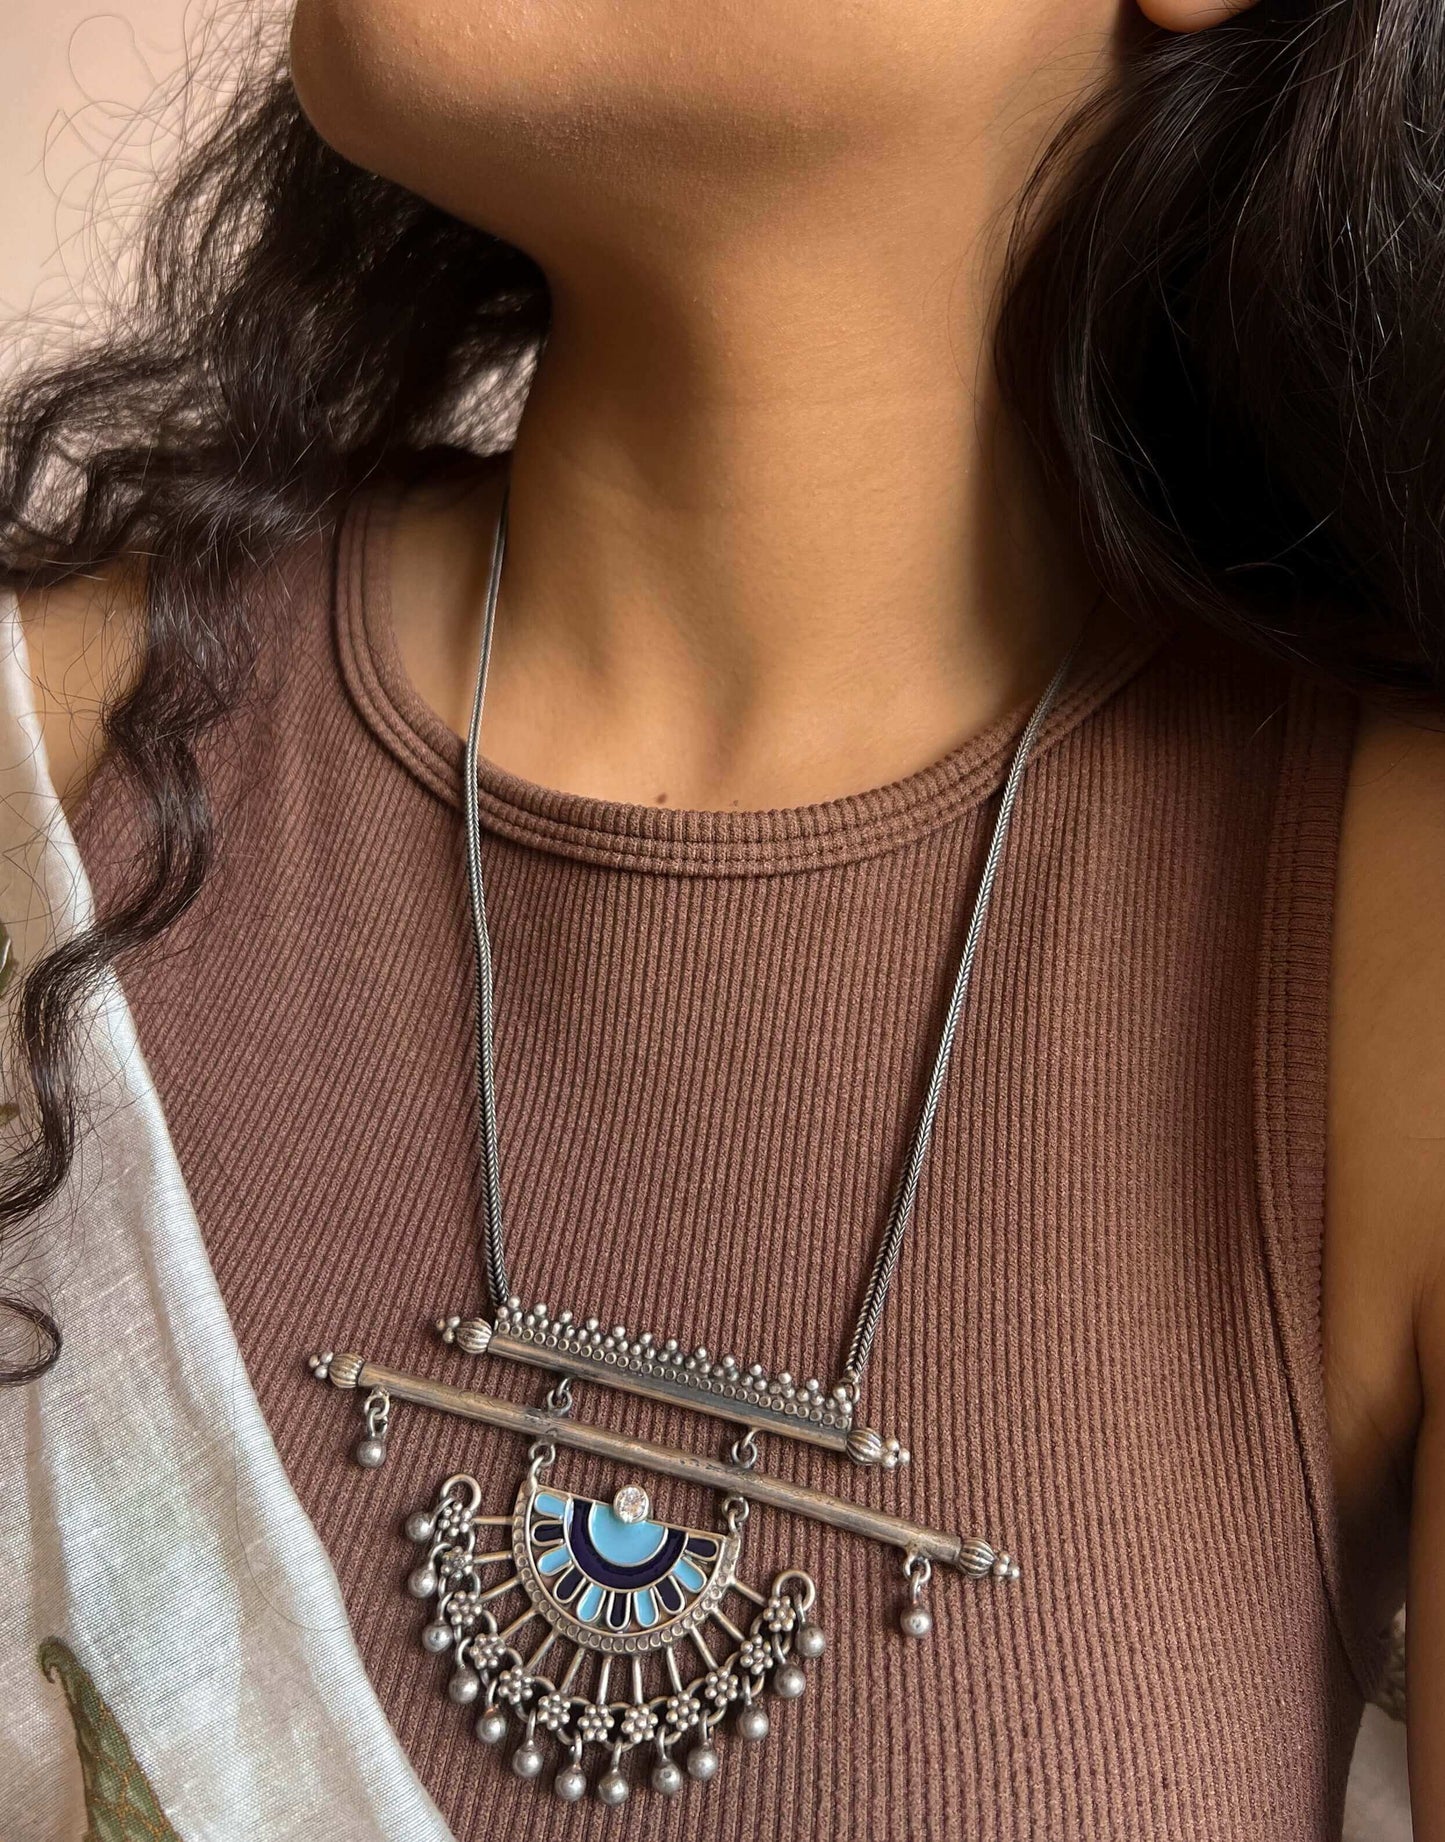 Adhyavi long silver necklace with enamel pendant